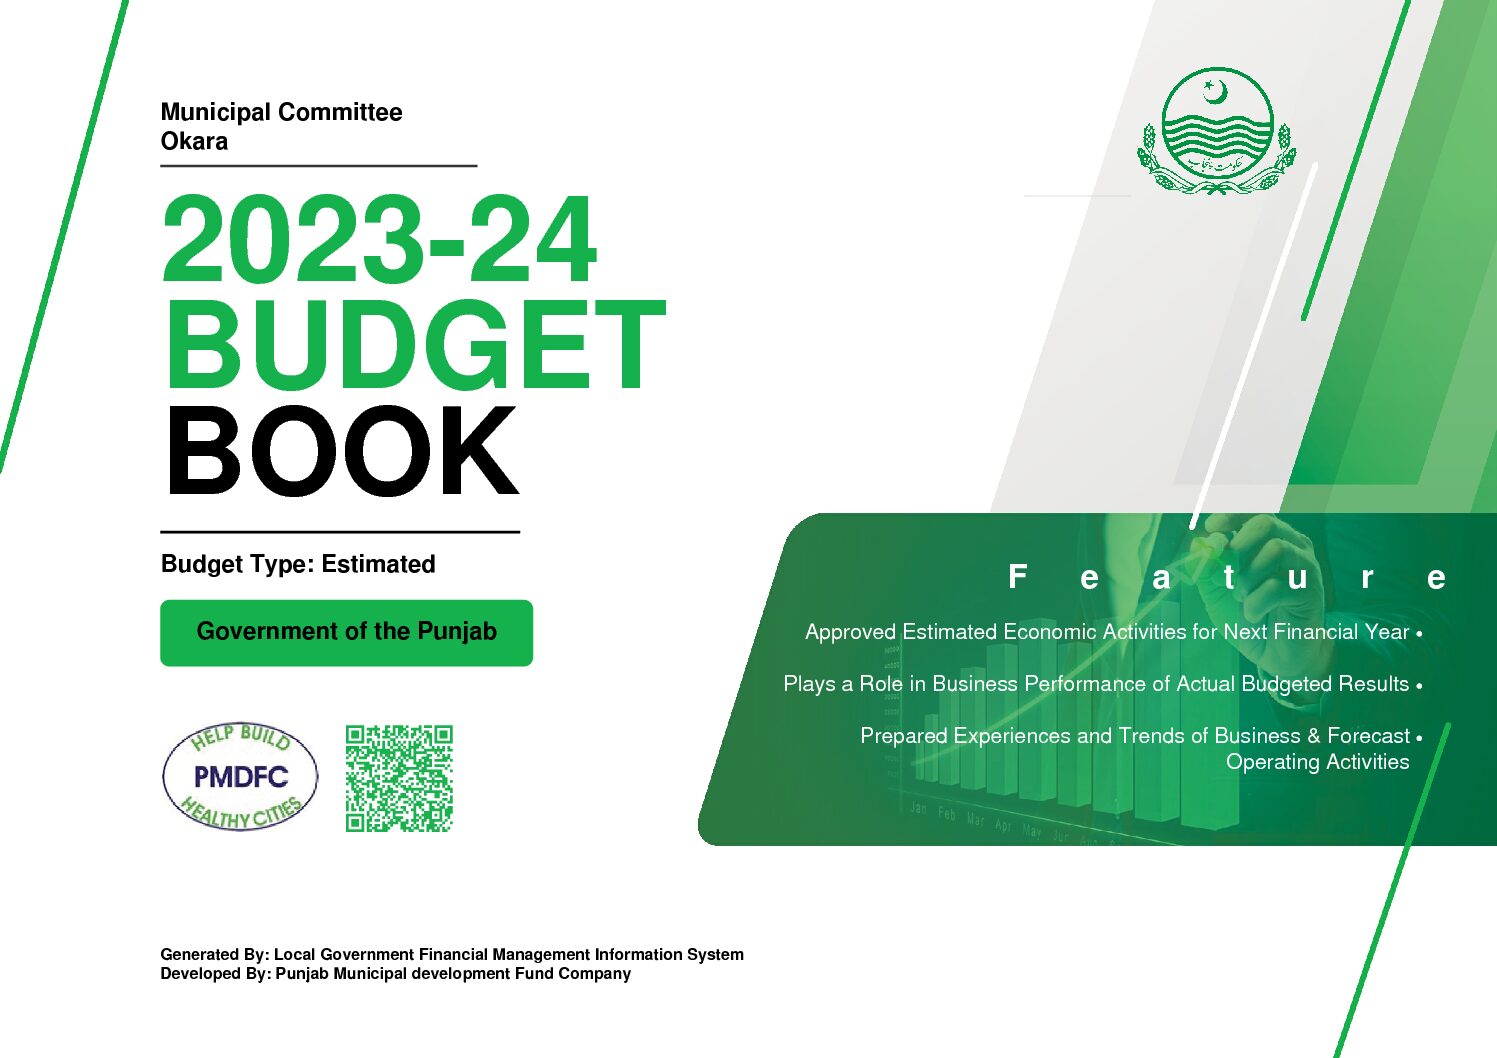 Budget Book 2023-2024